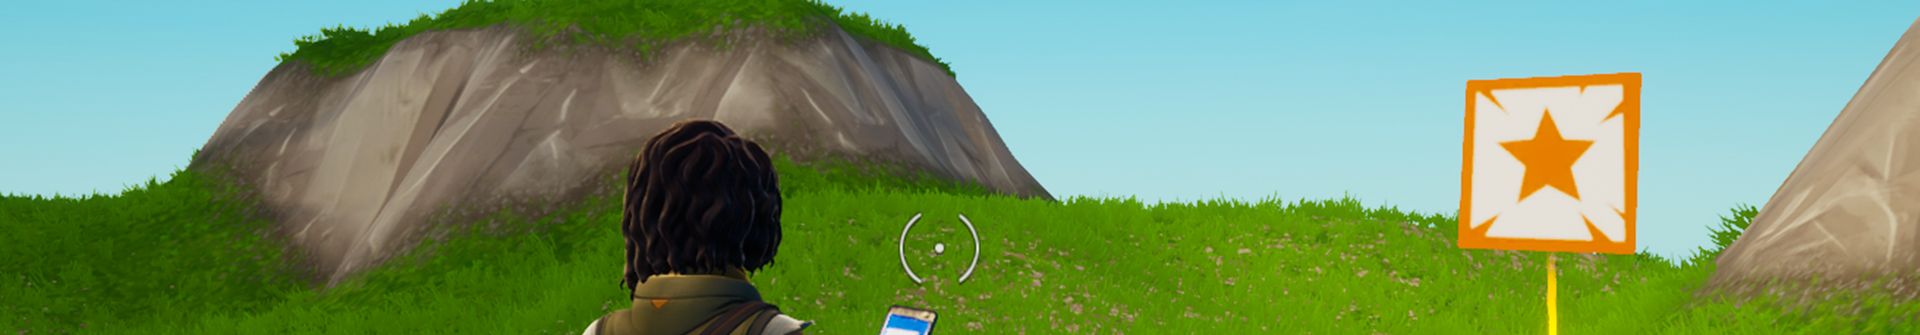 Touch Grass Simulator [ havei ] – Fortnite Creative Map Code